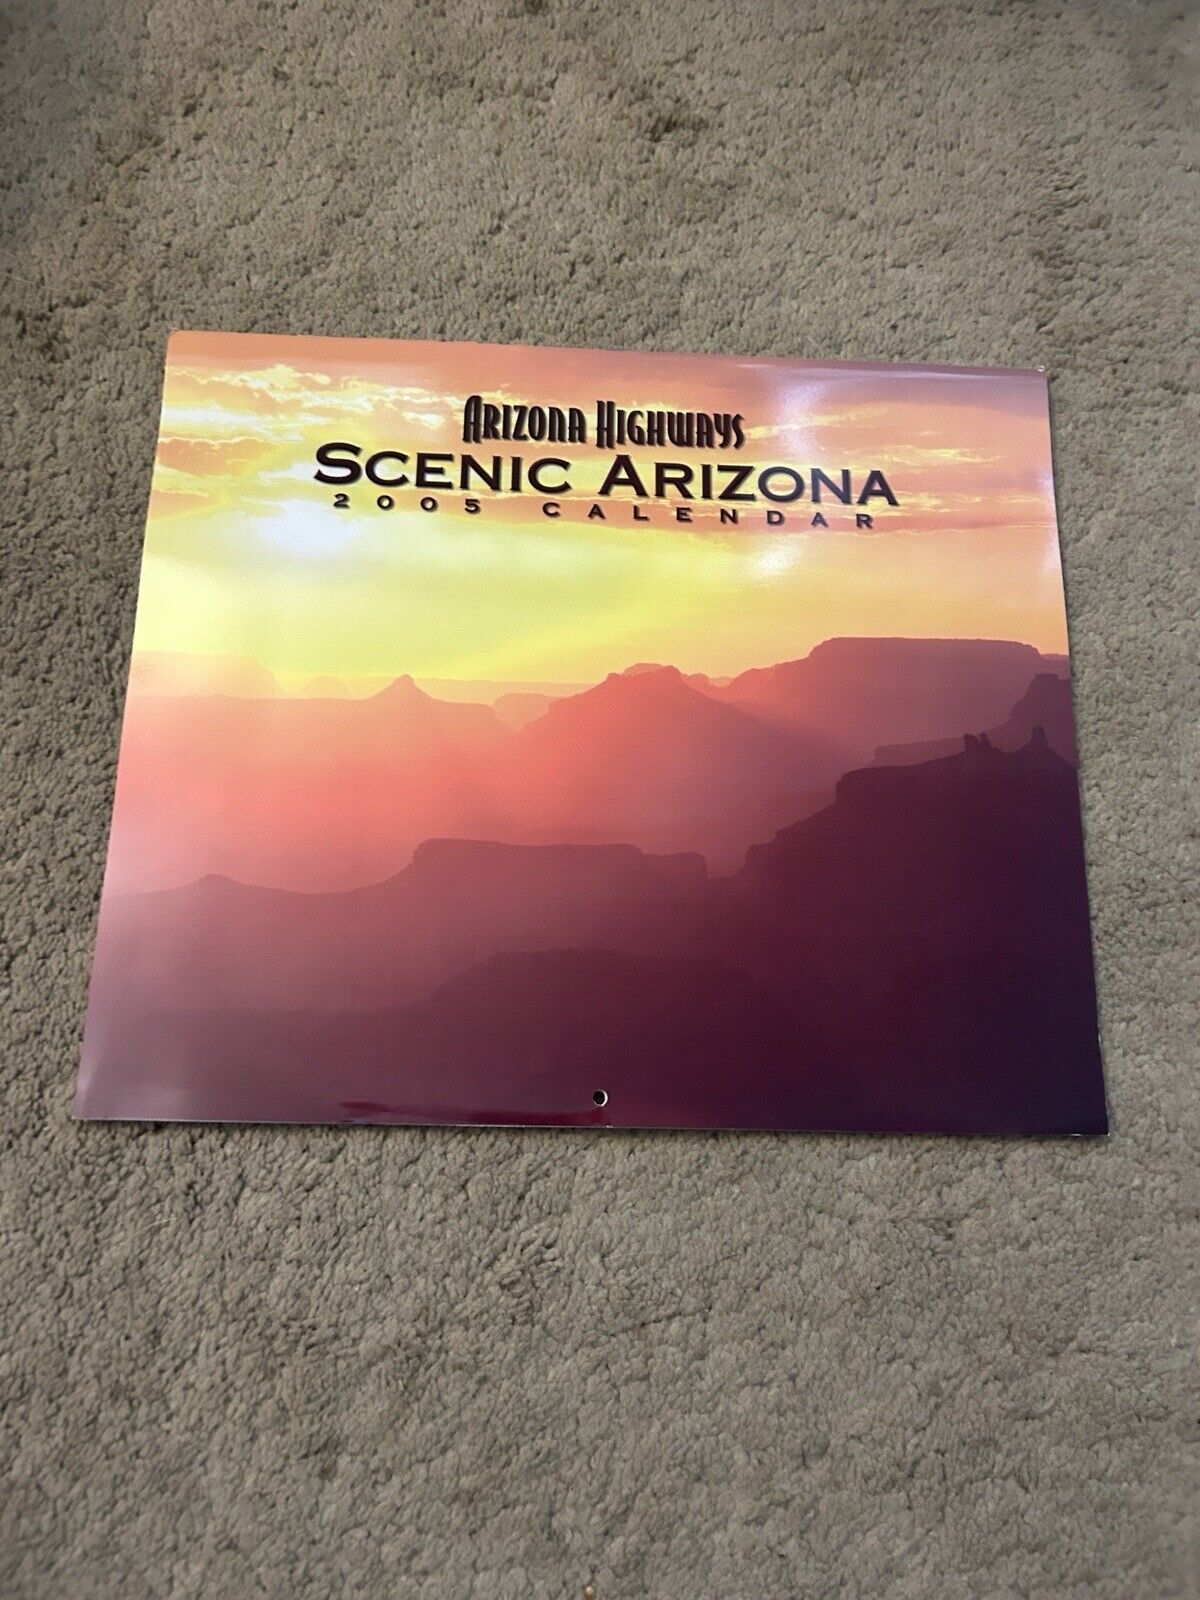 Scenic Arizona 2005 Calendar (Arizona Highways)